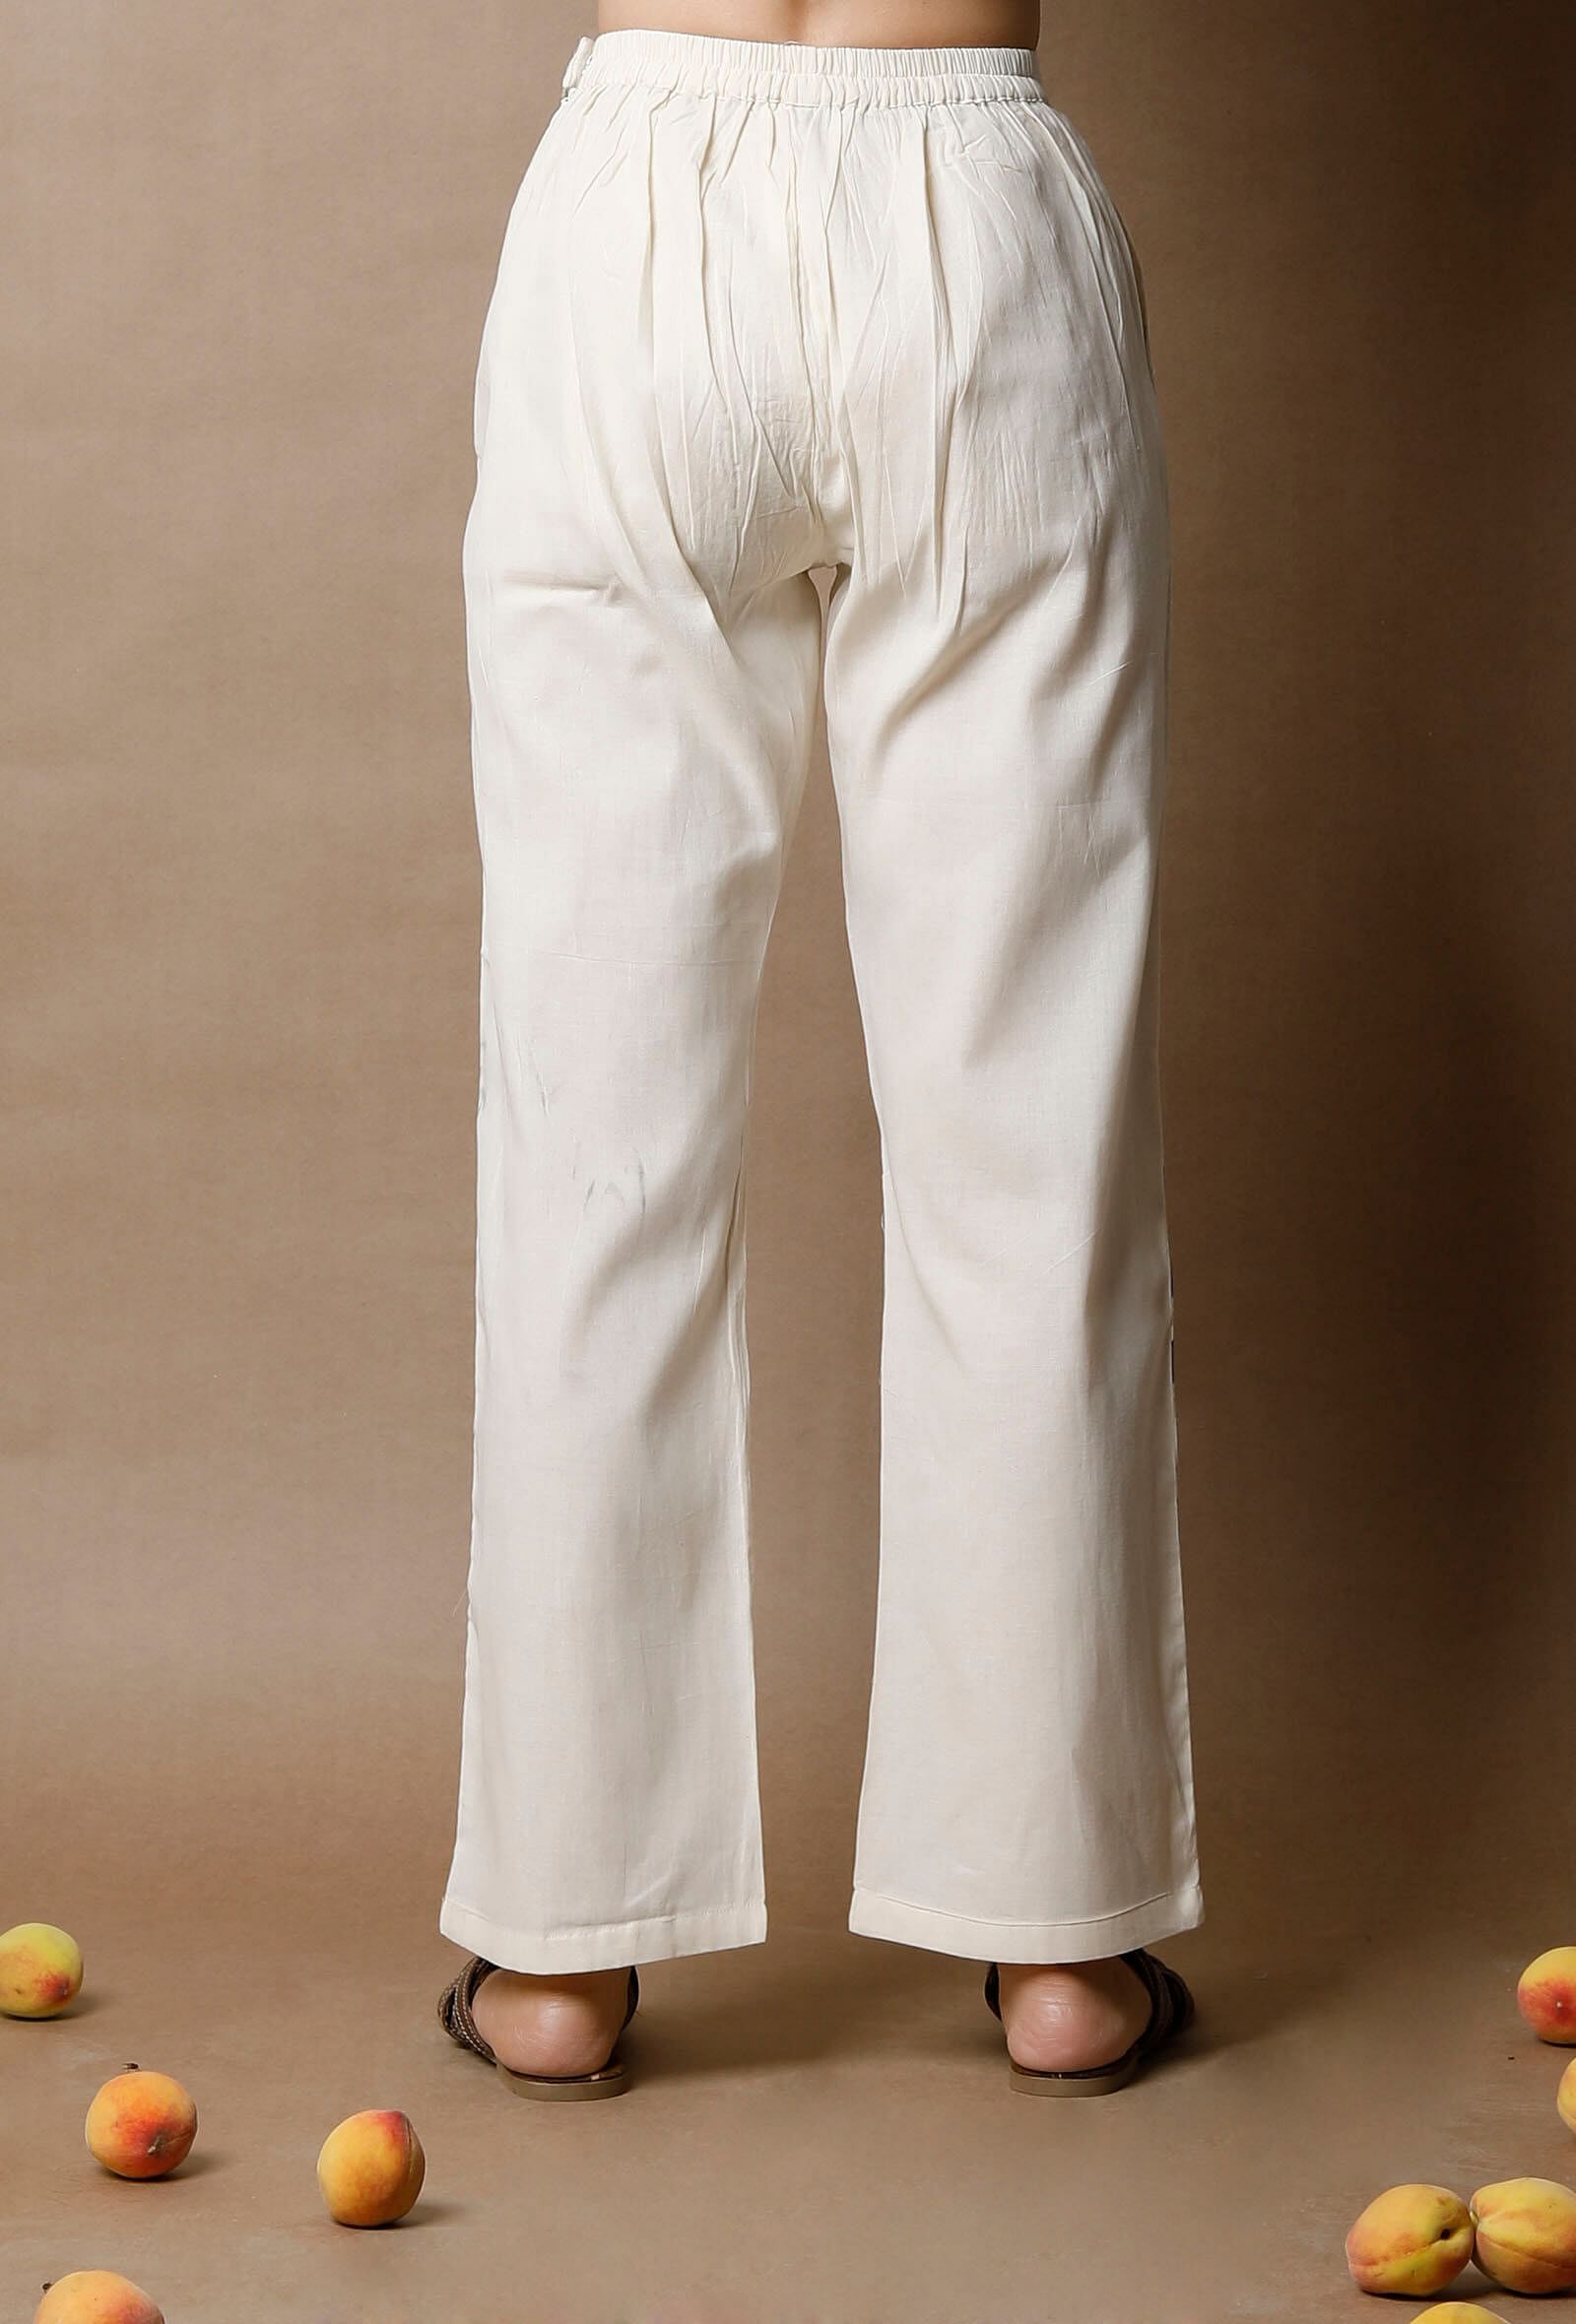 Off White Cotton Pants